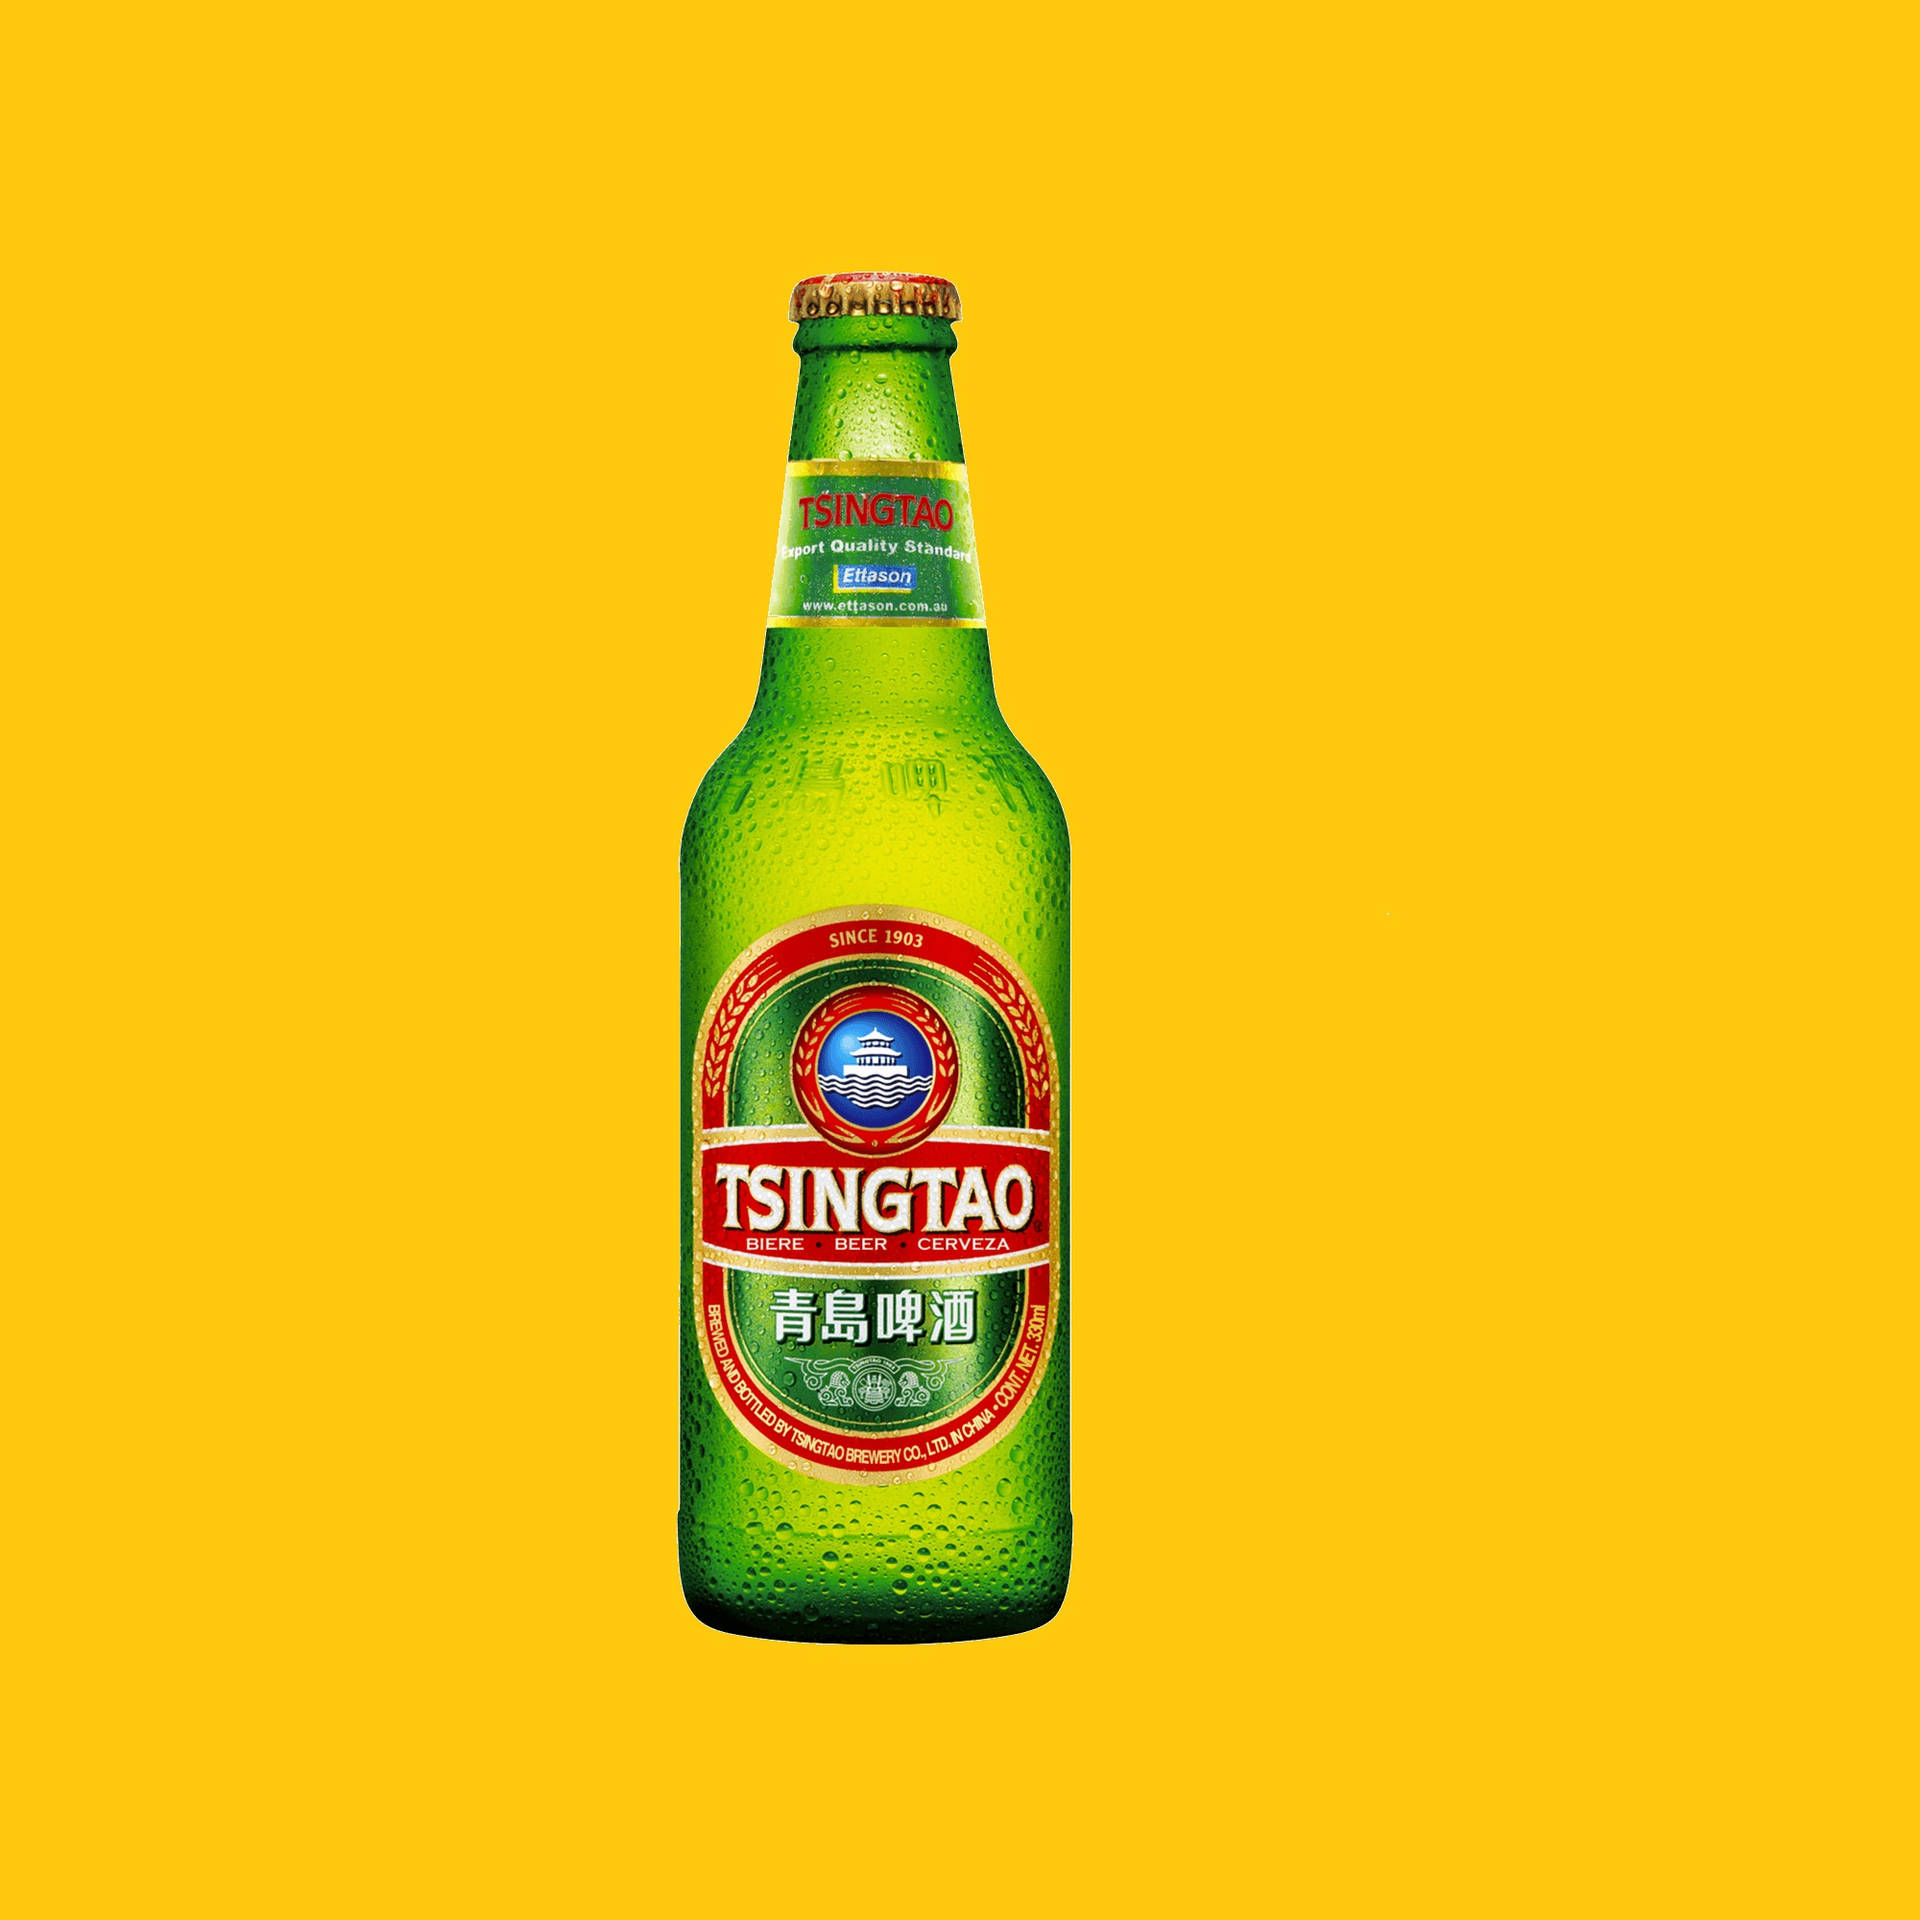 Tsingtao Beer Bottle Wallpaper